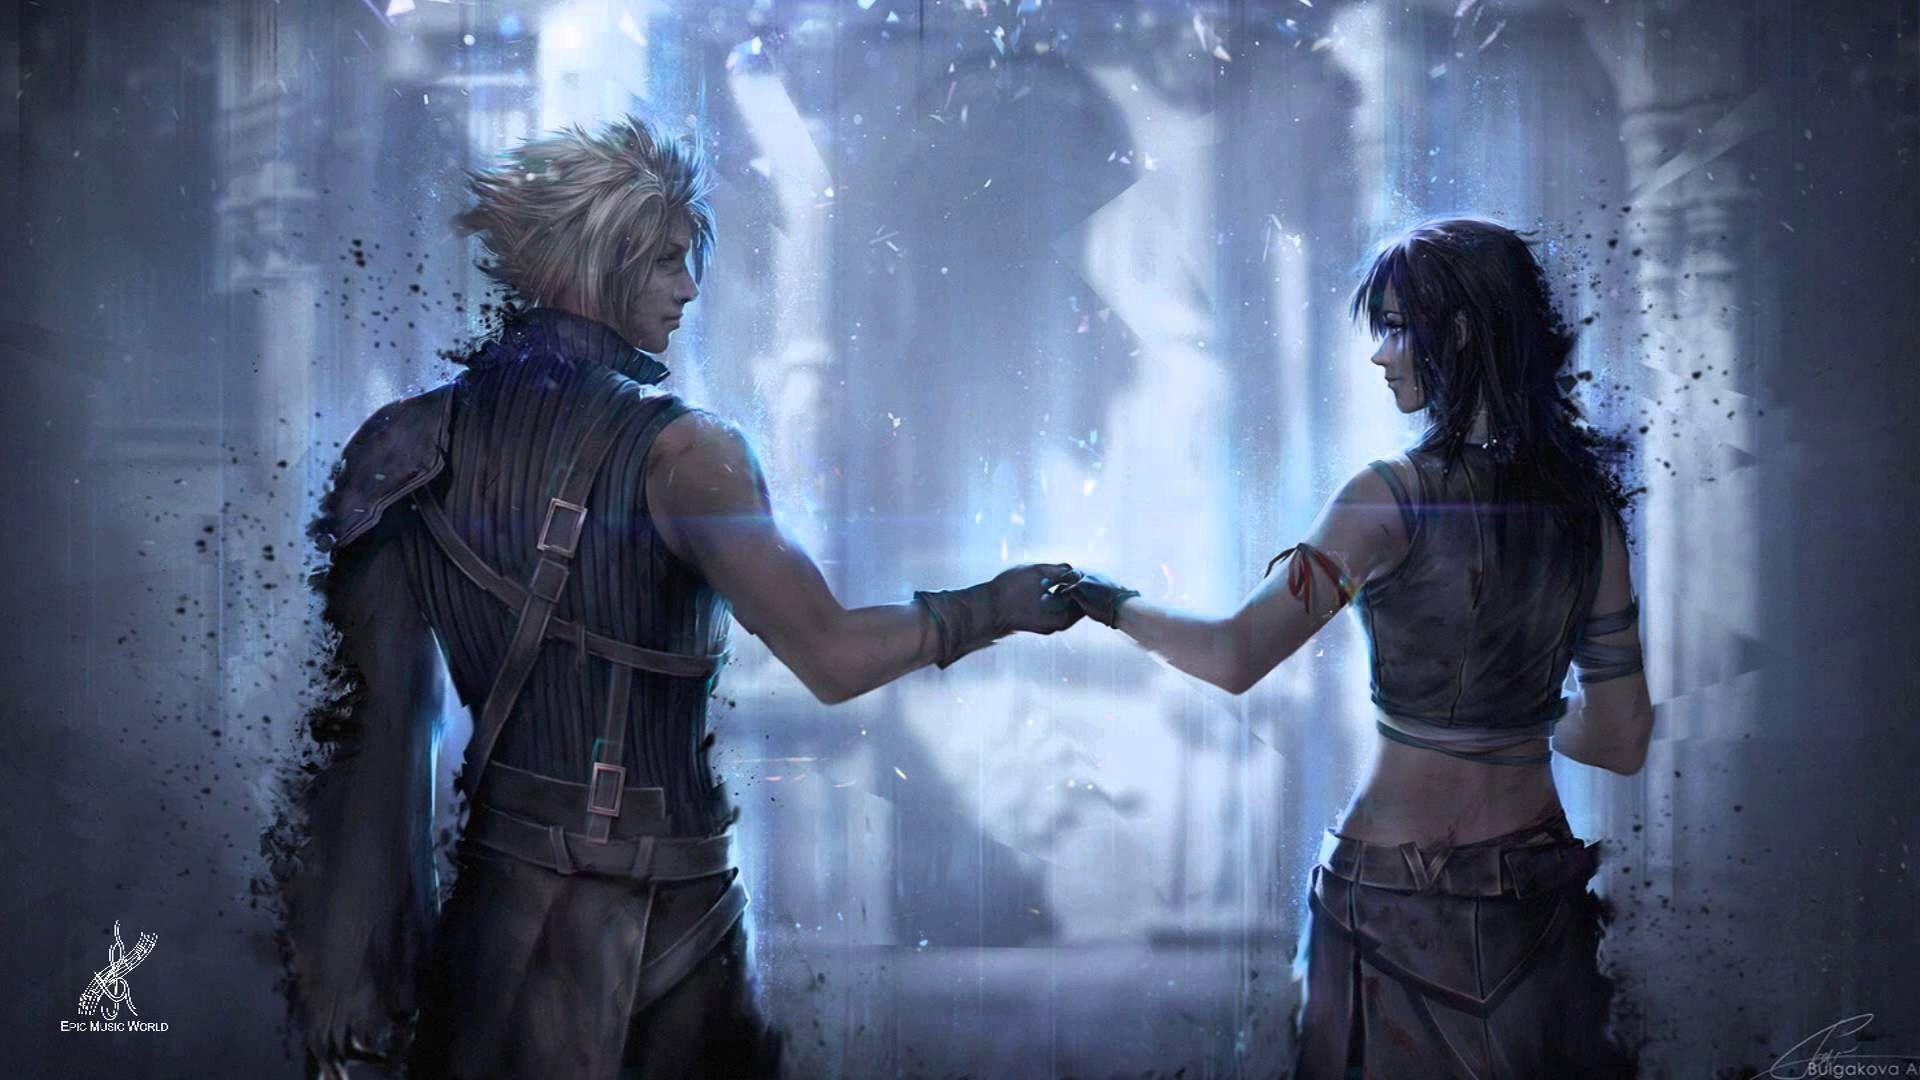 Final Fantasy Vii Remake Wallpapers Top Free Final Fantasy Vii Remake